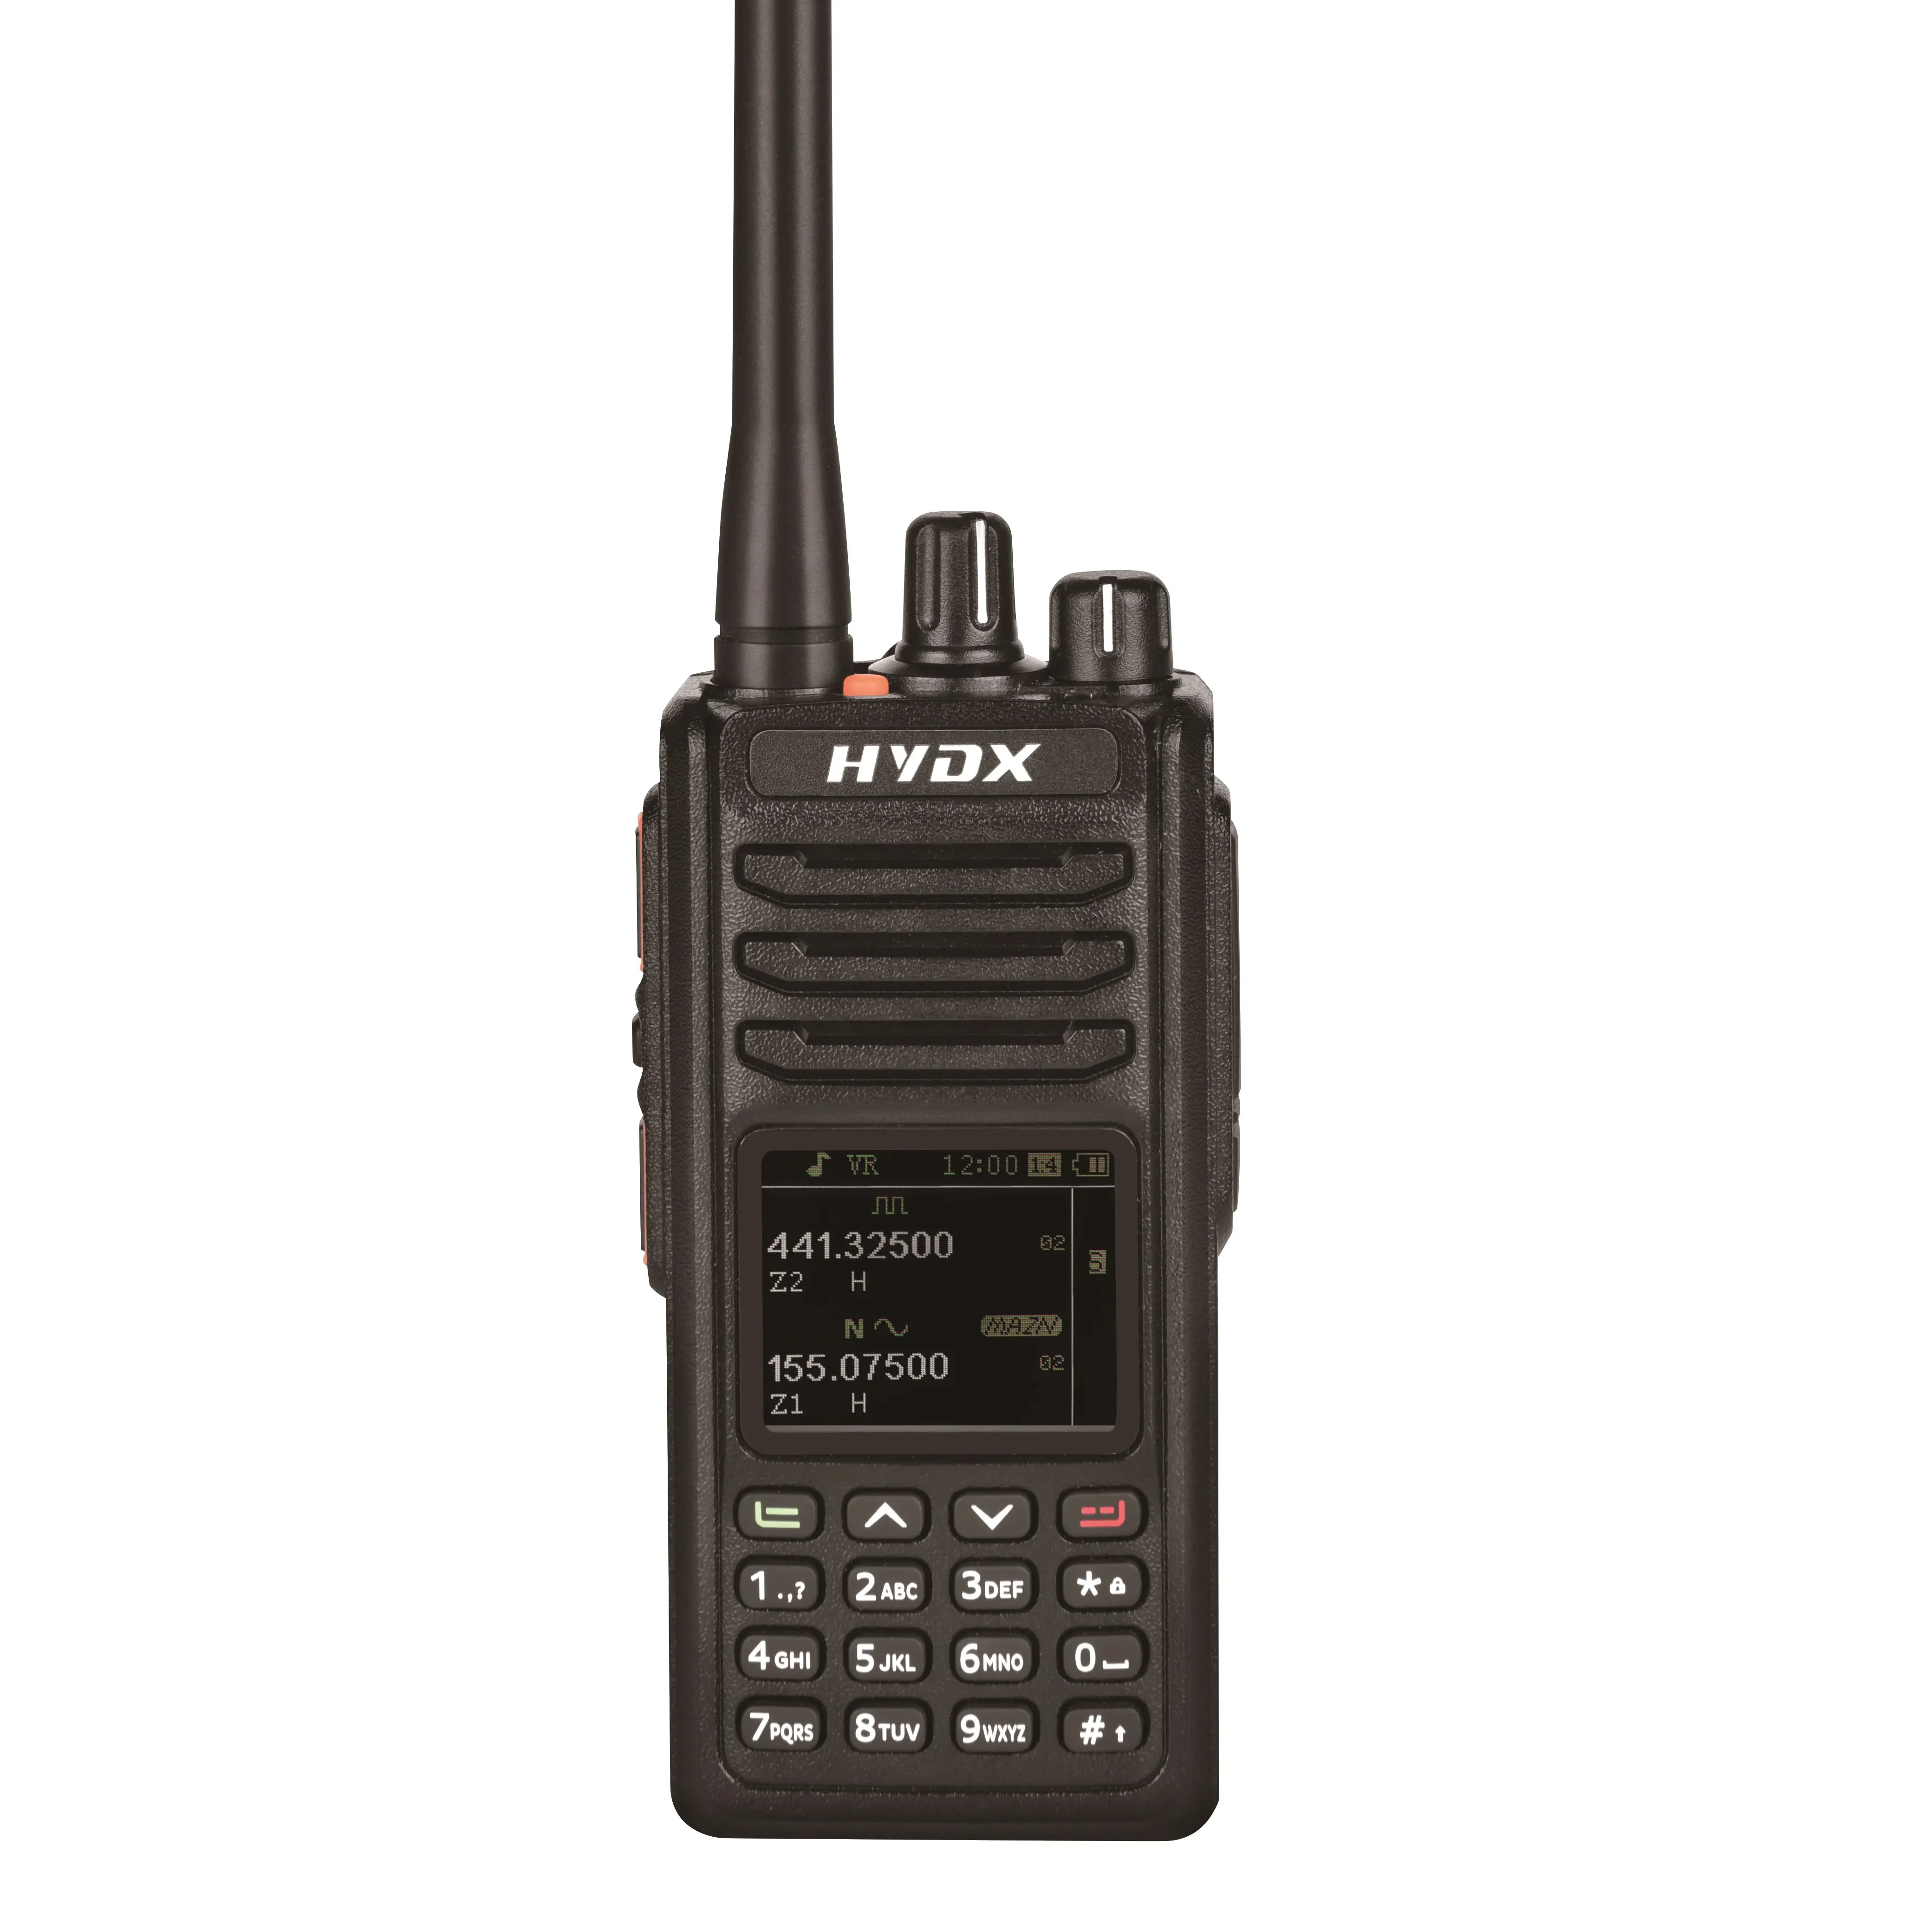 HYDX-D2000 di alta qualità 5W impermeabile Walkie Talkie Uhf Vhf 136-174mhz 400-470mhz Dual Band digitale Mobile Radio con GPS